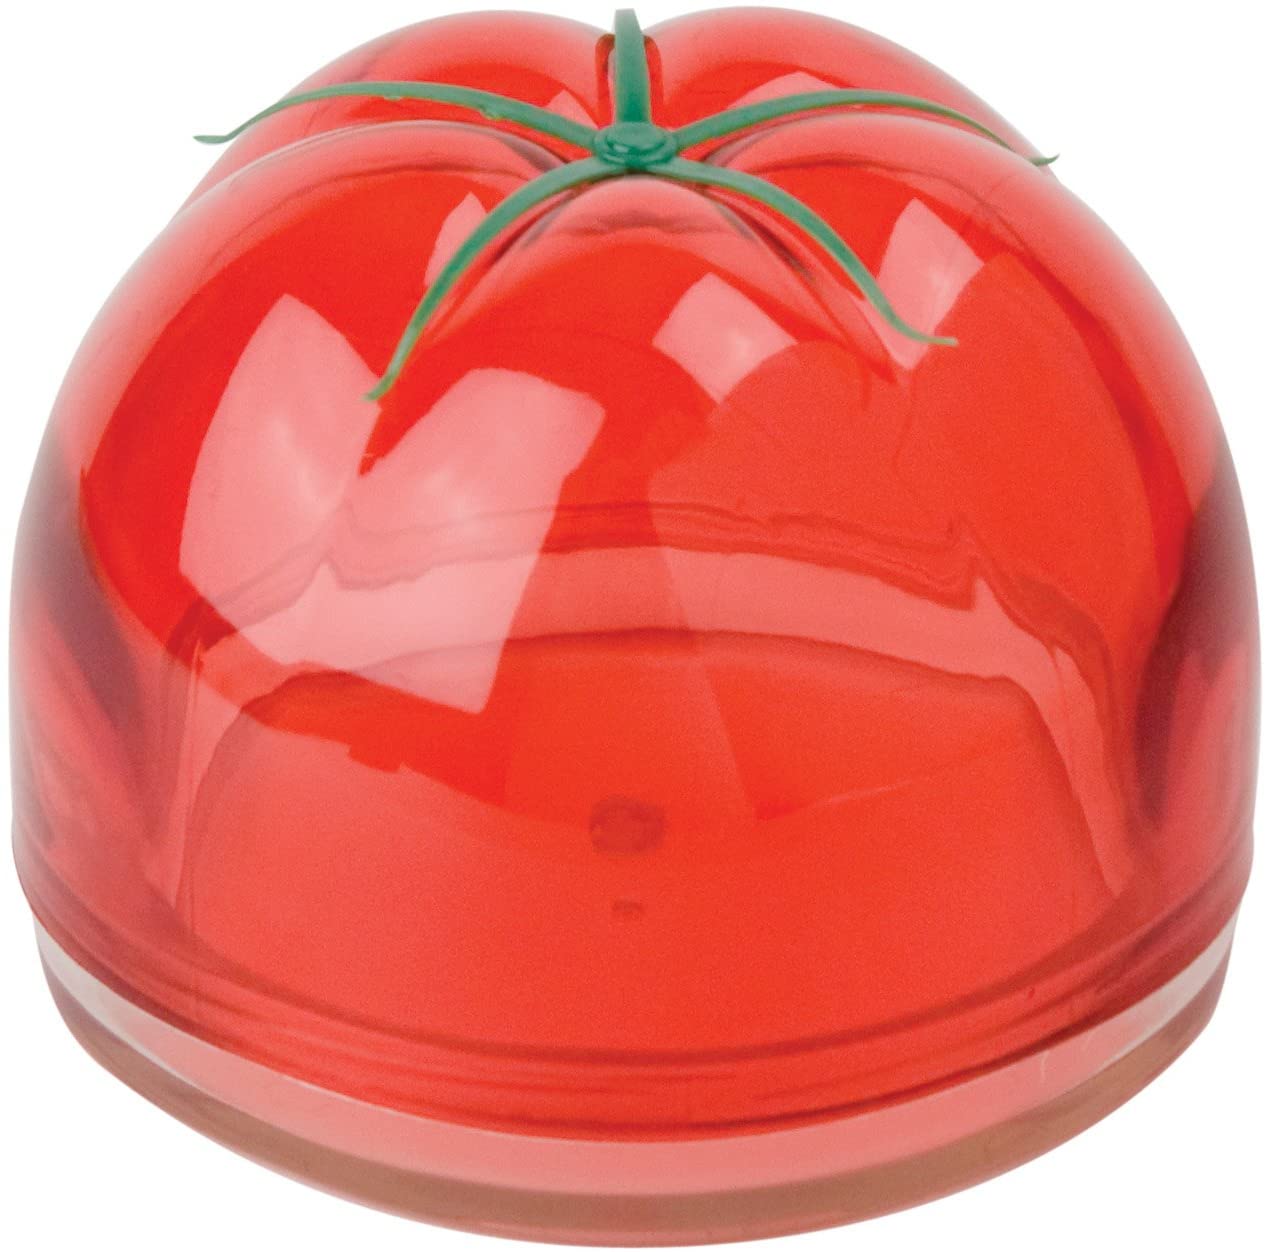 Tulz 37052 Tomato Save-A-Half, 4 x 4 x 3 inches, Red